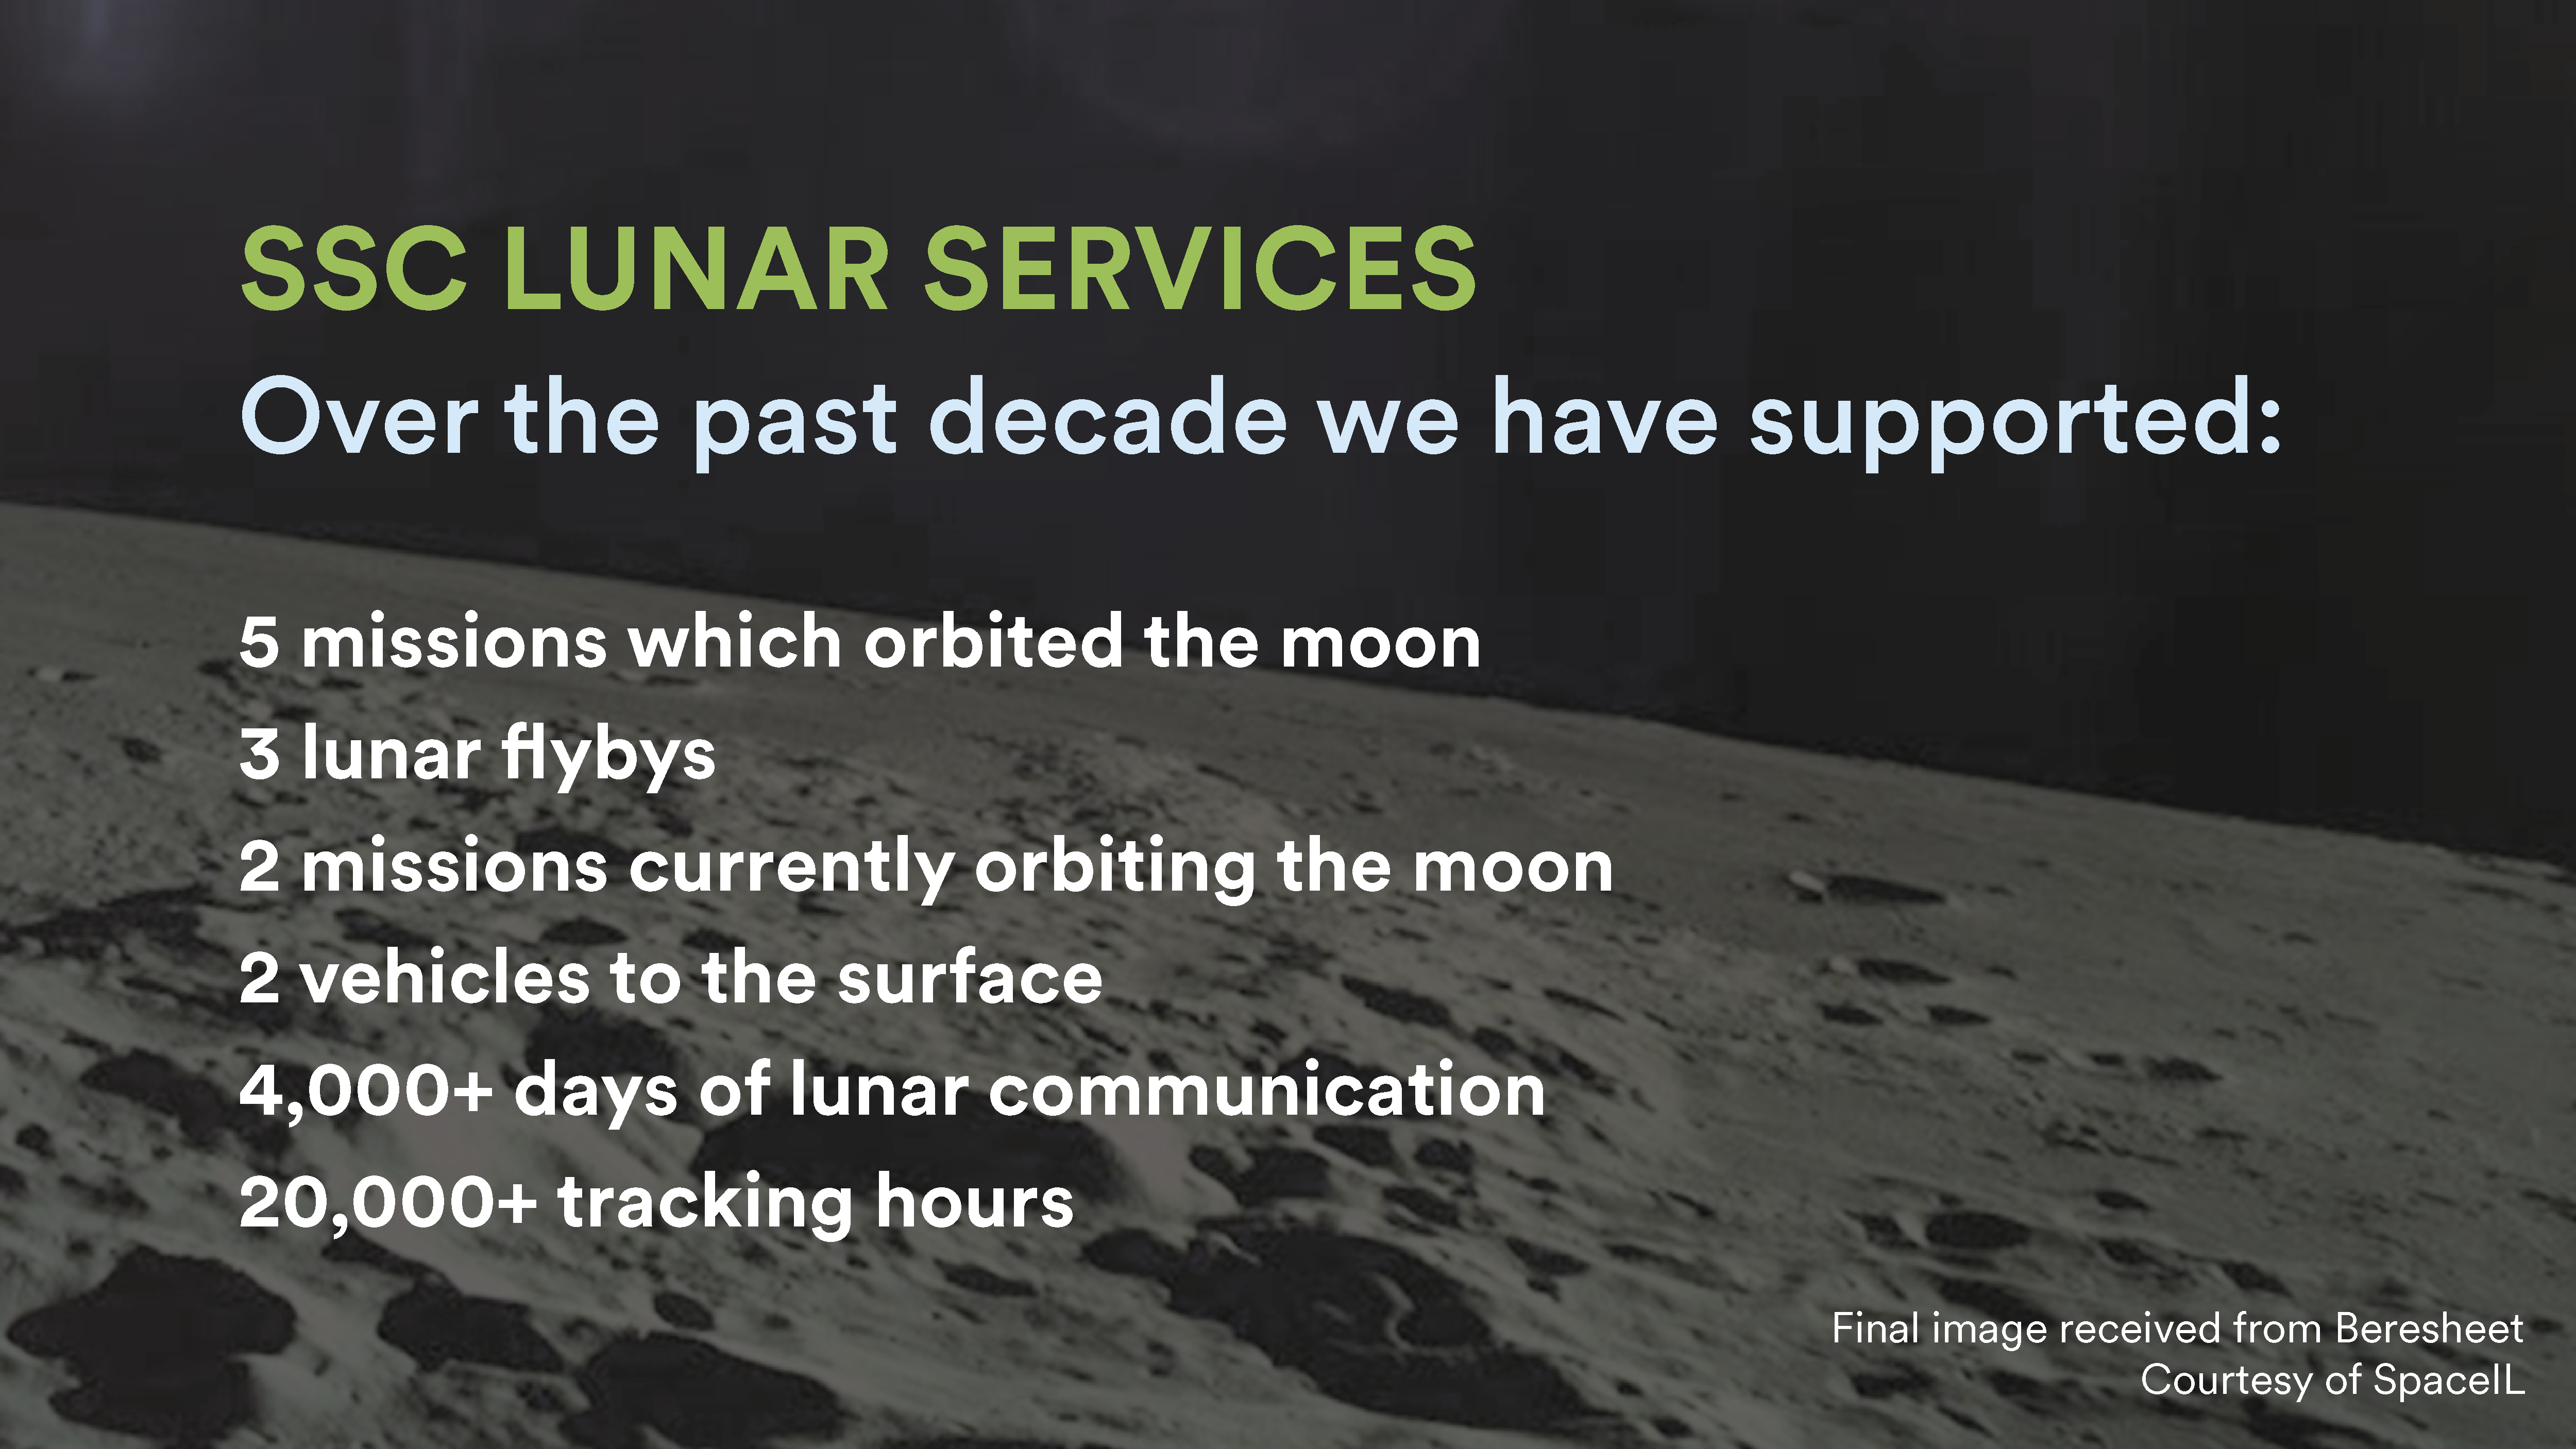 SSC Lunar Services for SSC Web